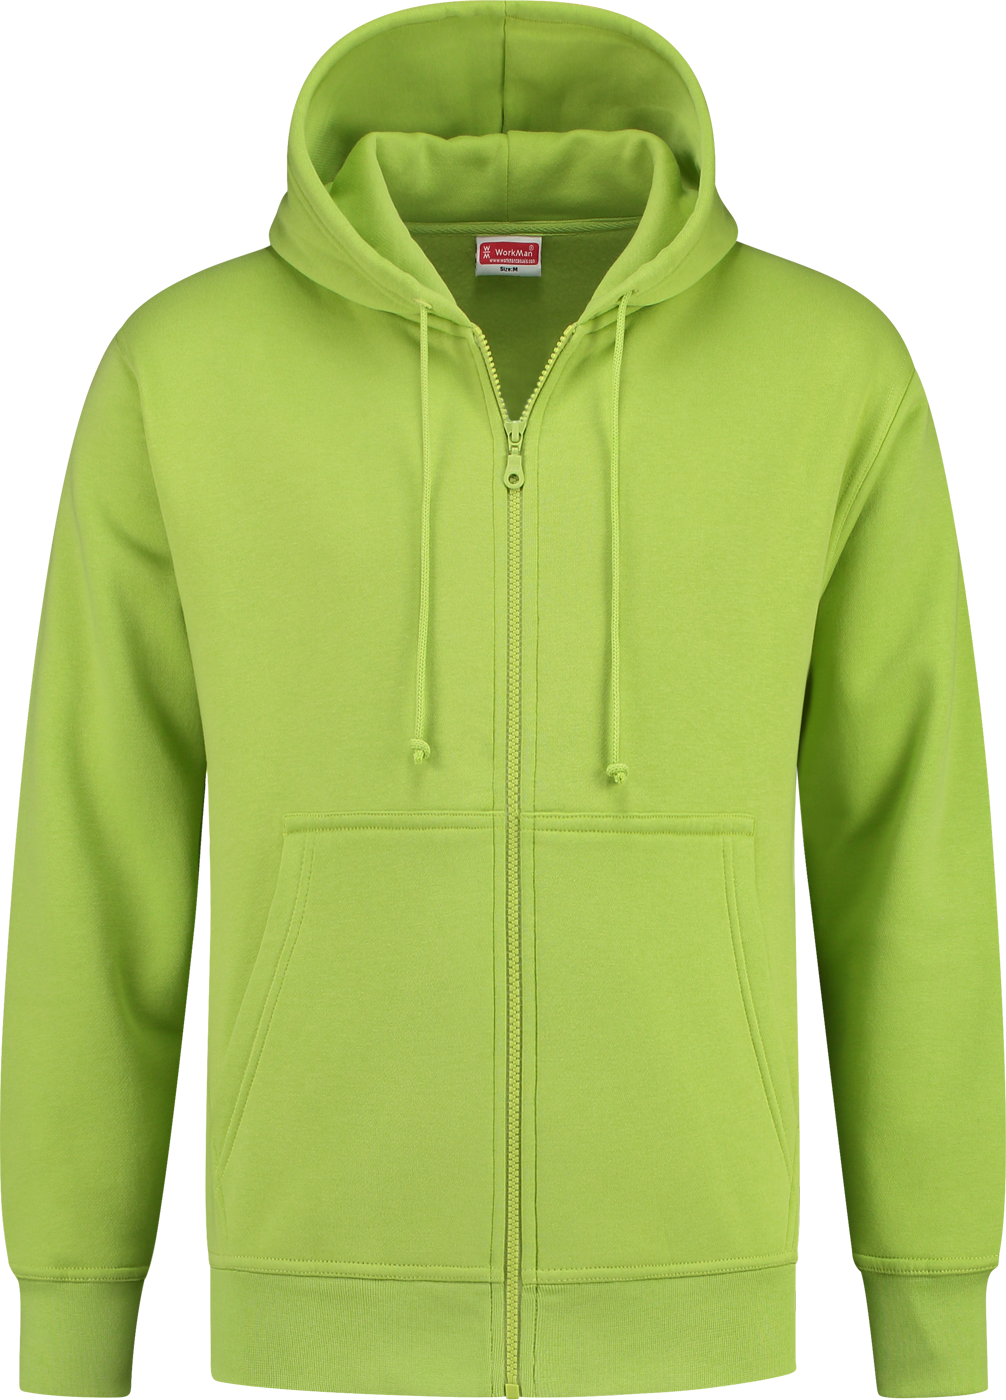 8419 Hooded Sweatvest Uni Lime Green